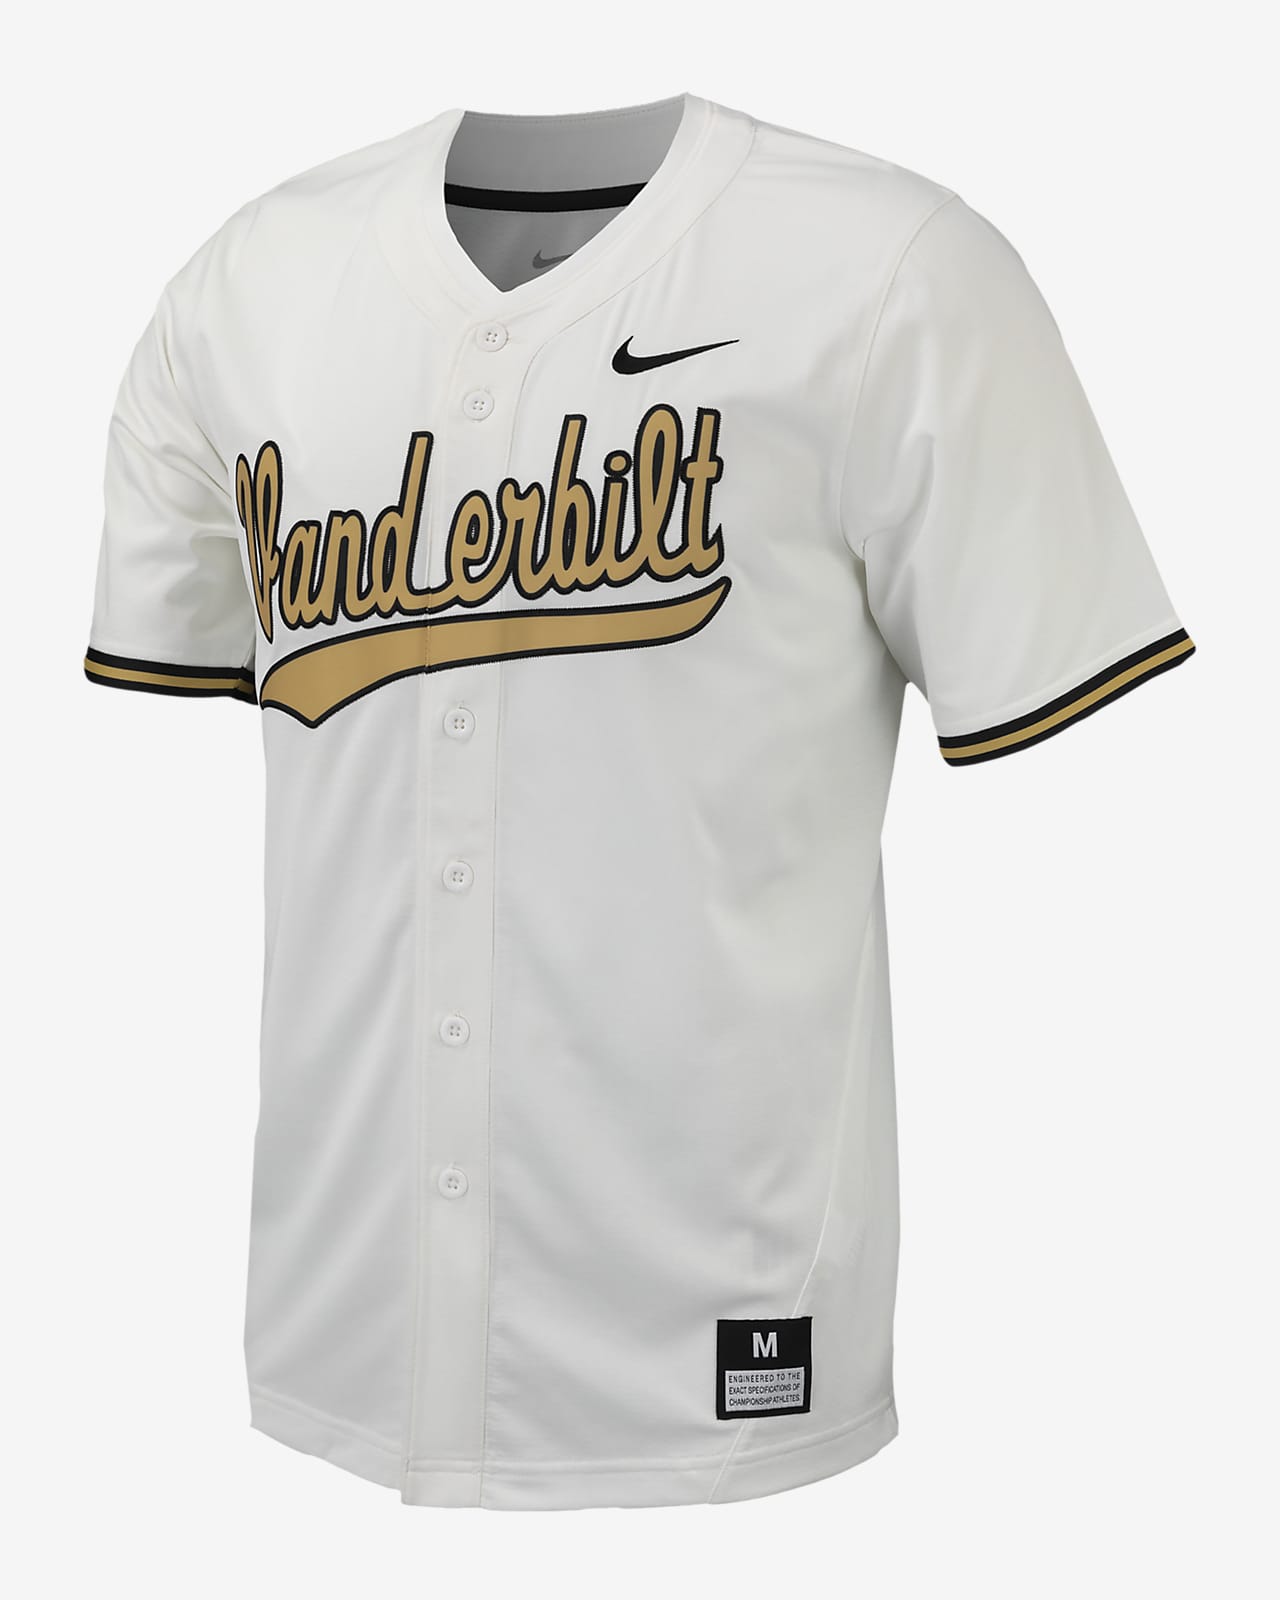 Vanderbilt Men's Nike College Replica Baseball Jersey